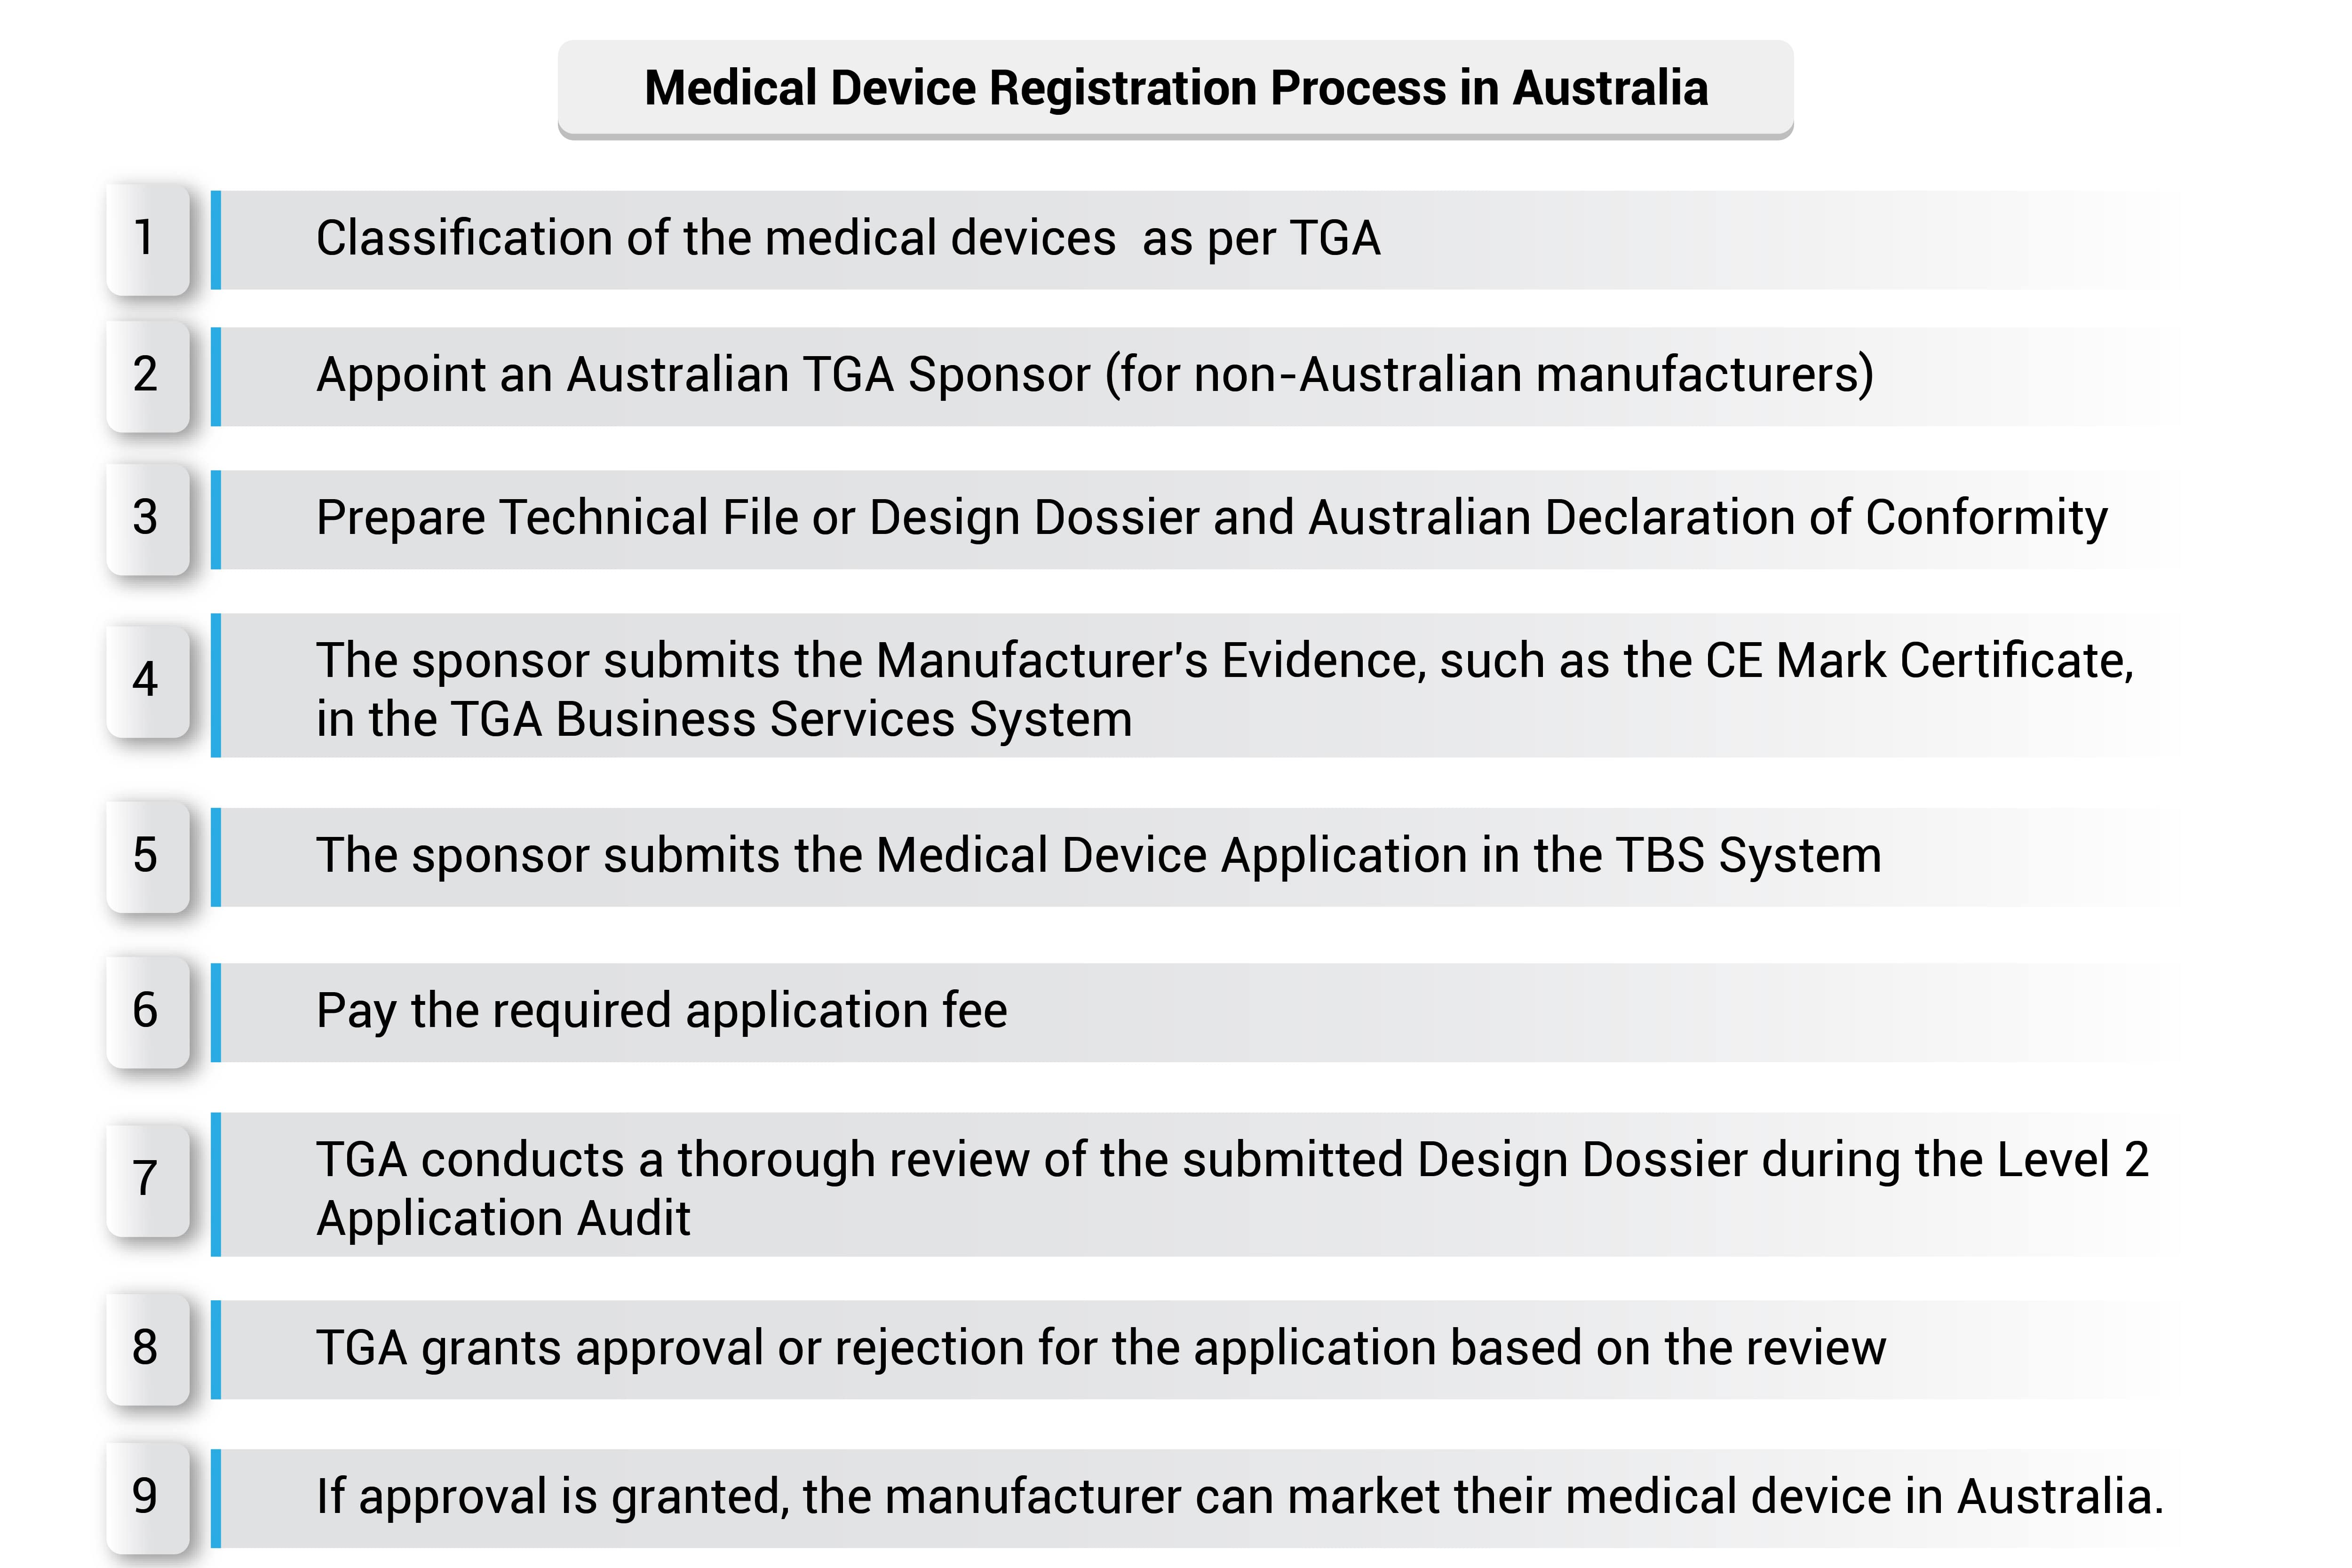 Medical Device Registration in Australia